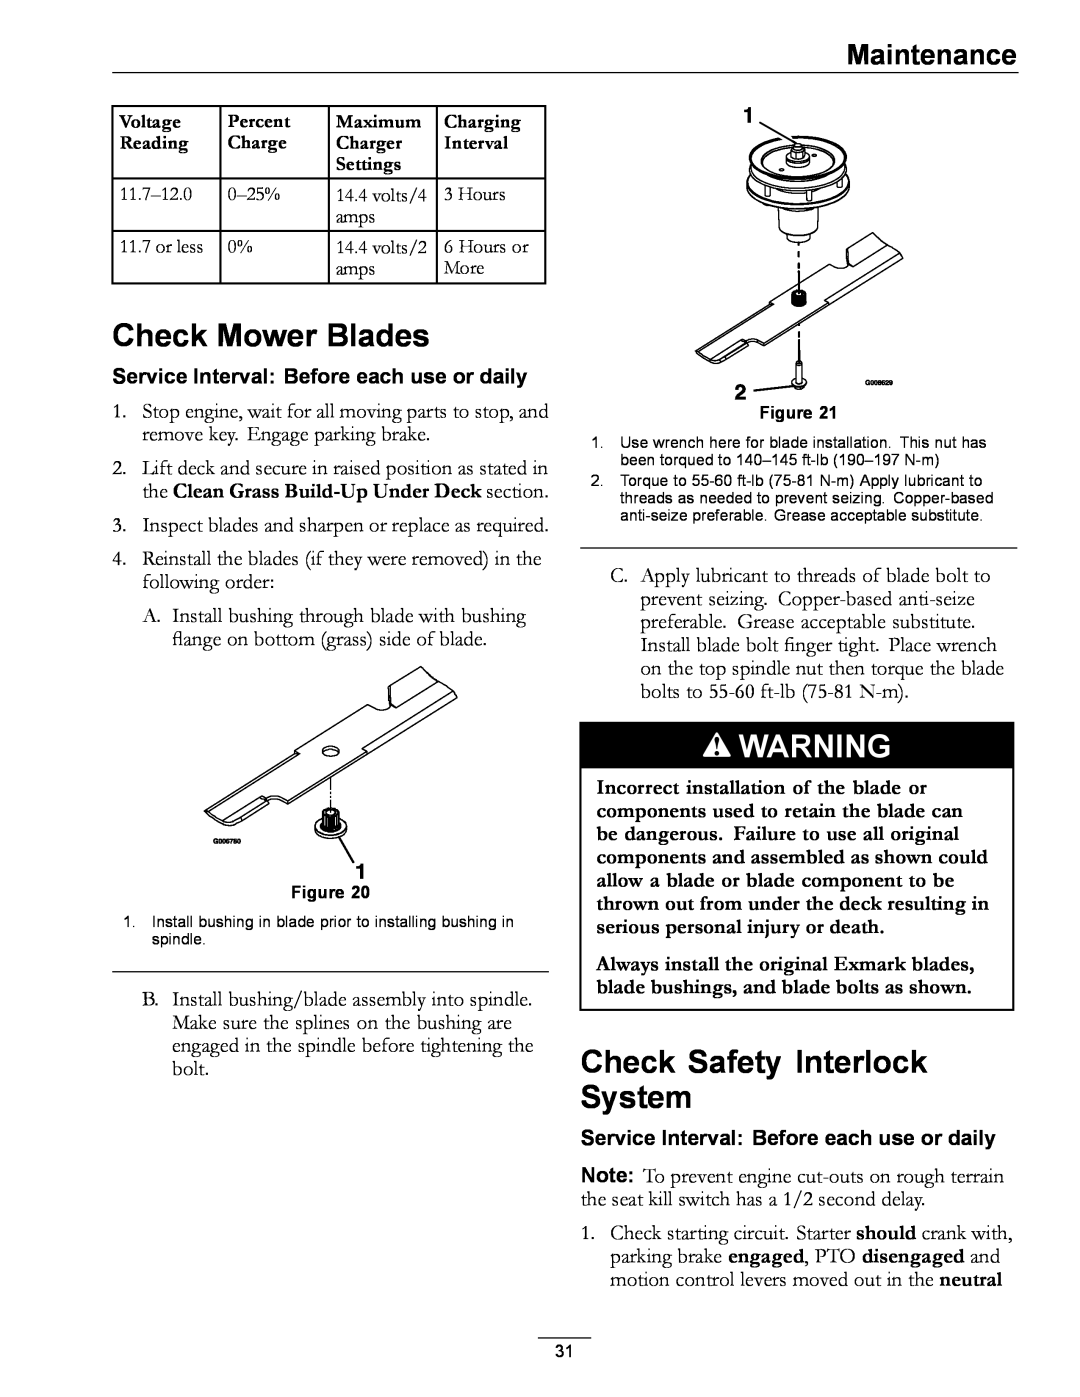 Exmark 000 & higher manual Check Mower Blades, Check Safety Interlock System, Maintenance 